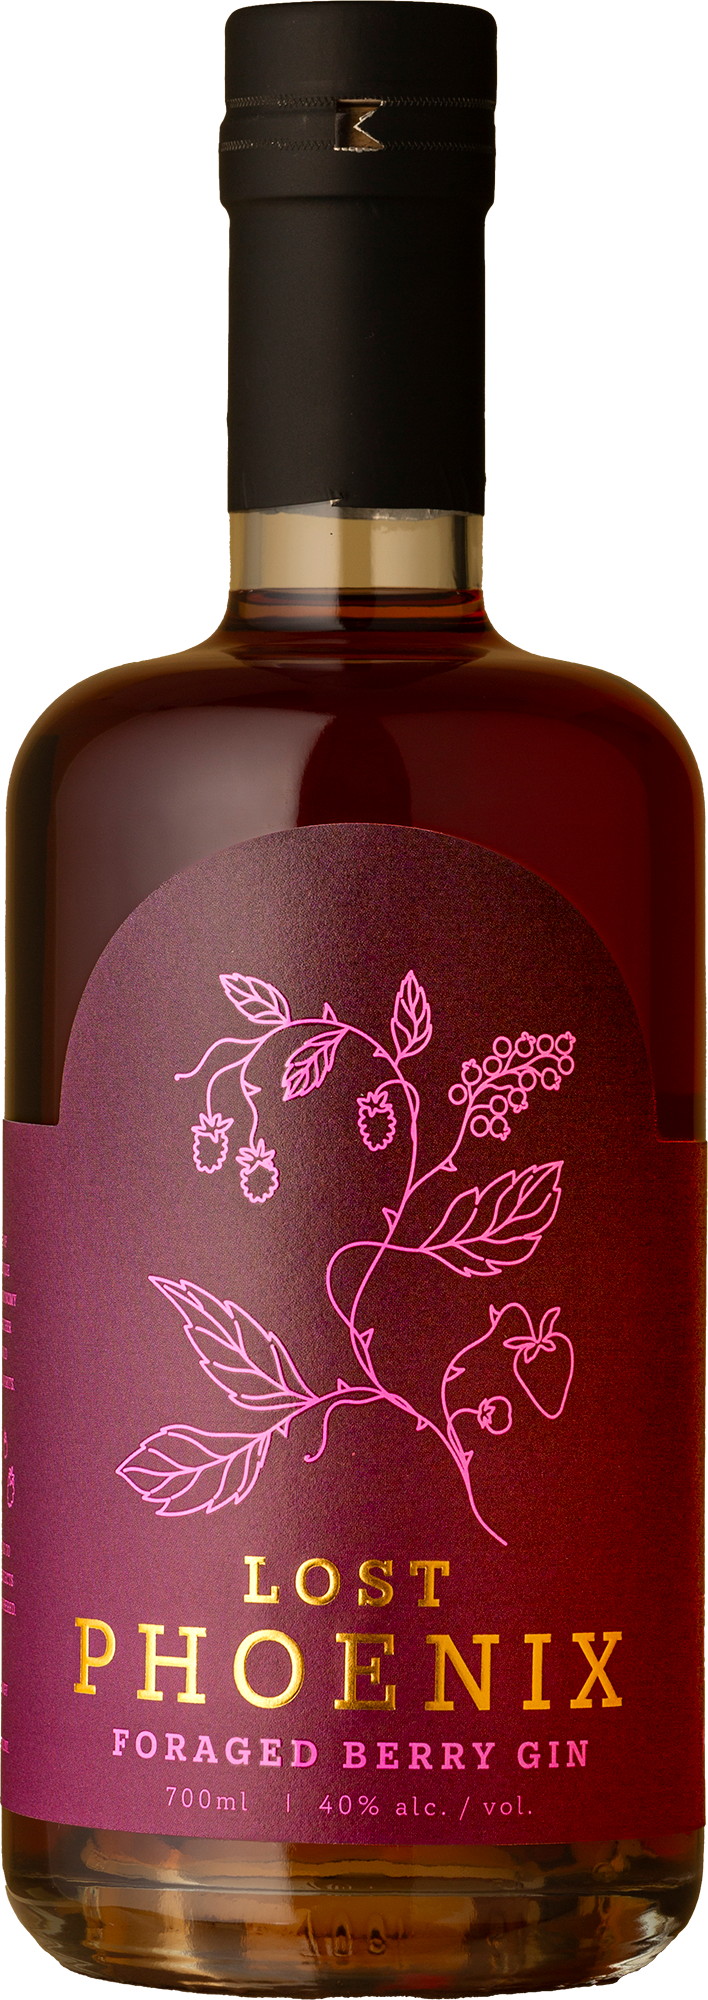 Lost Phoenix Spirits - Foraged Berry Gin 700mL Not Wine